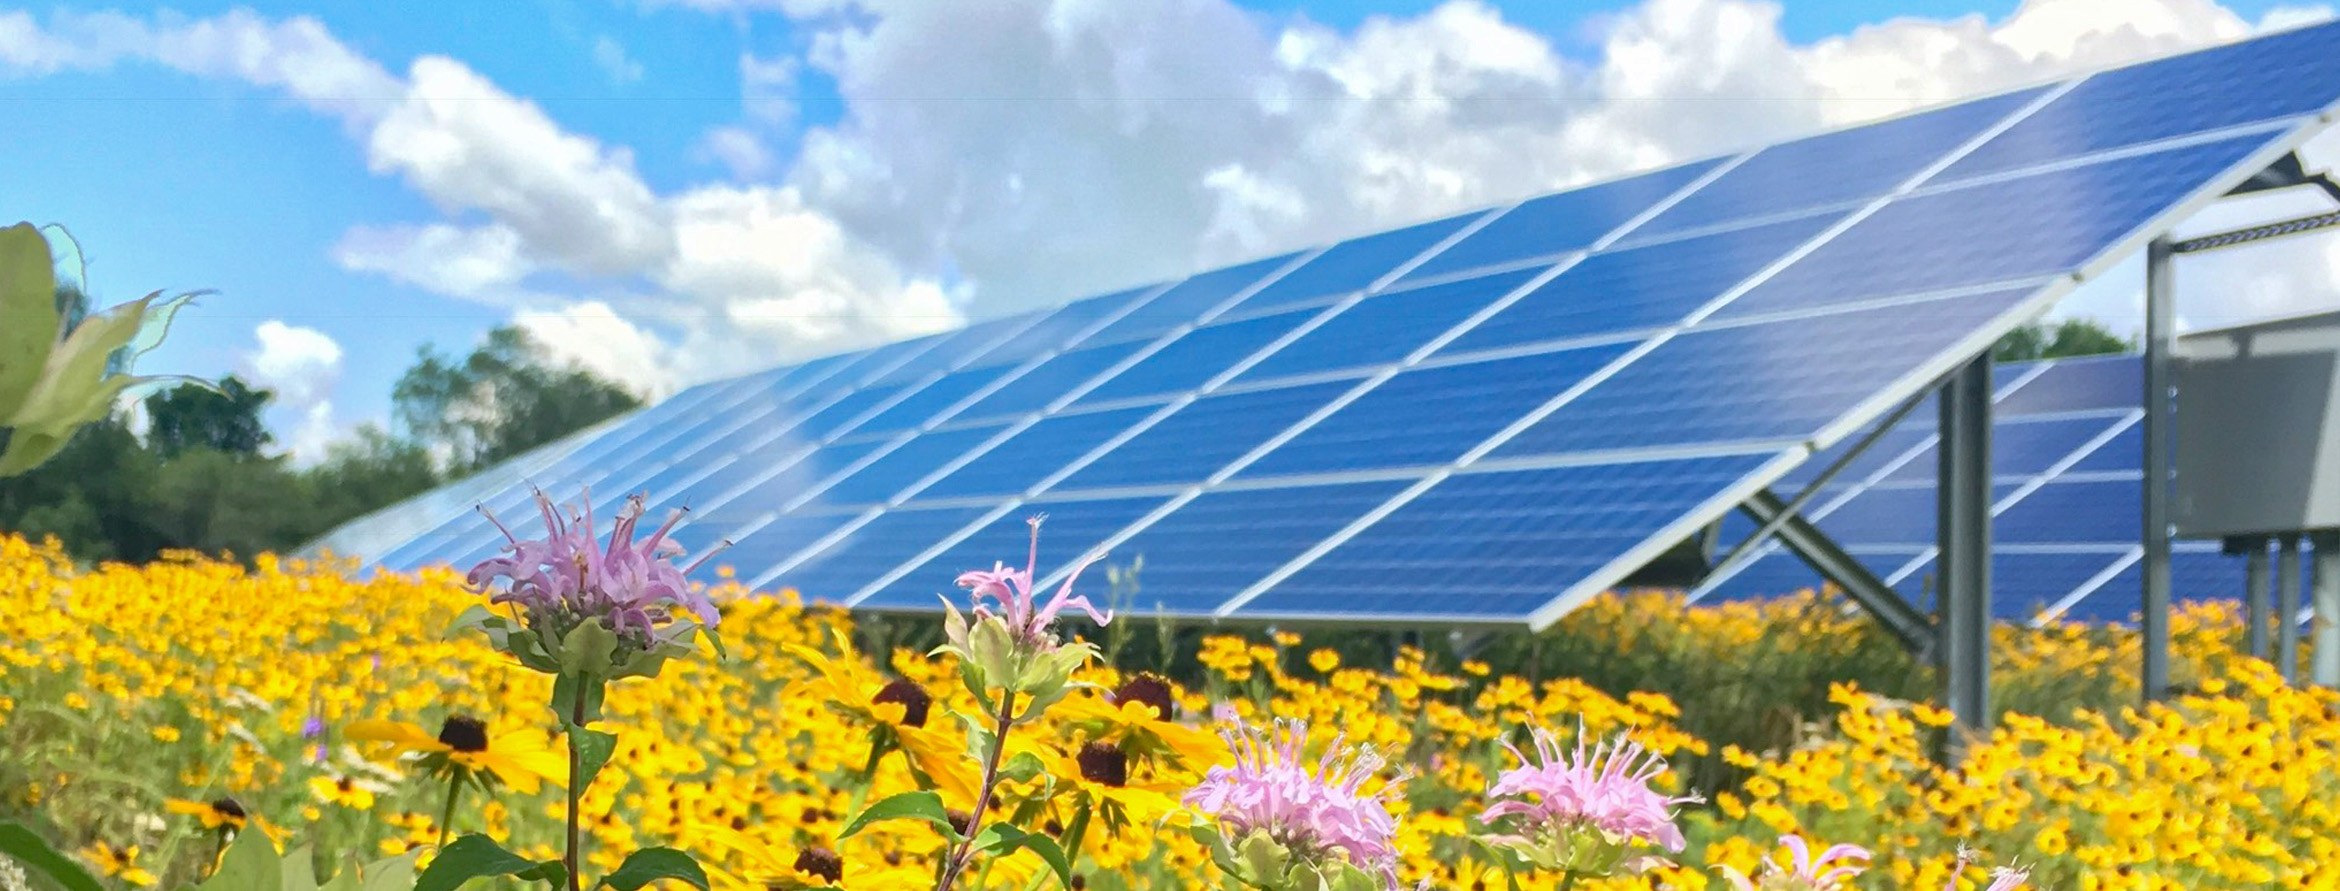 Solar panels with pollinator species and grass. Photo: Rob Davis